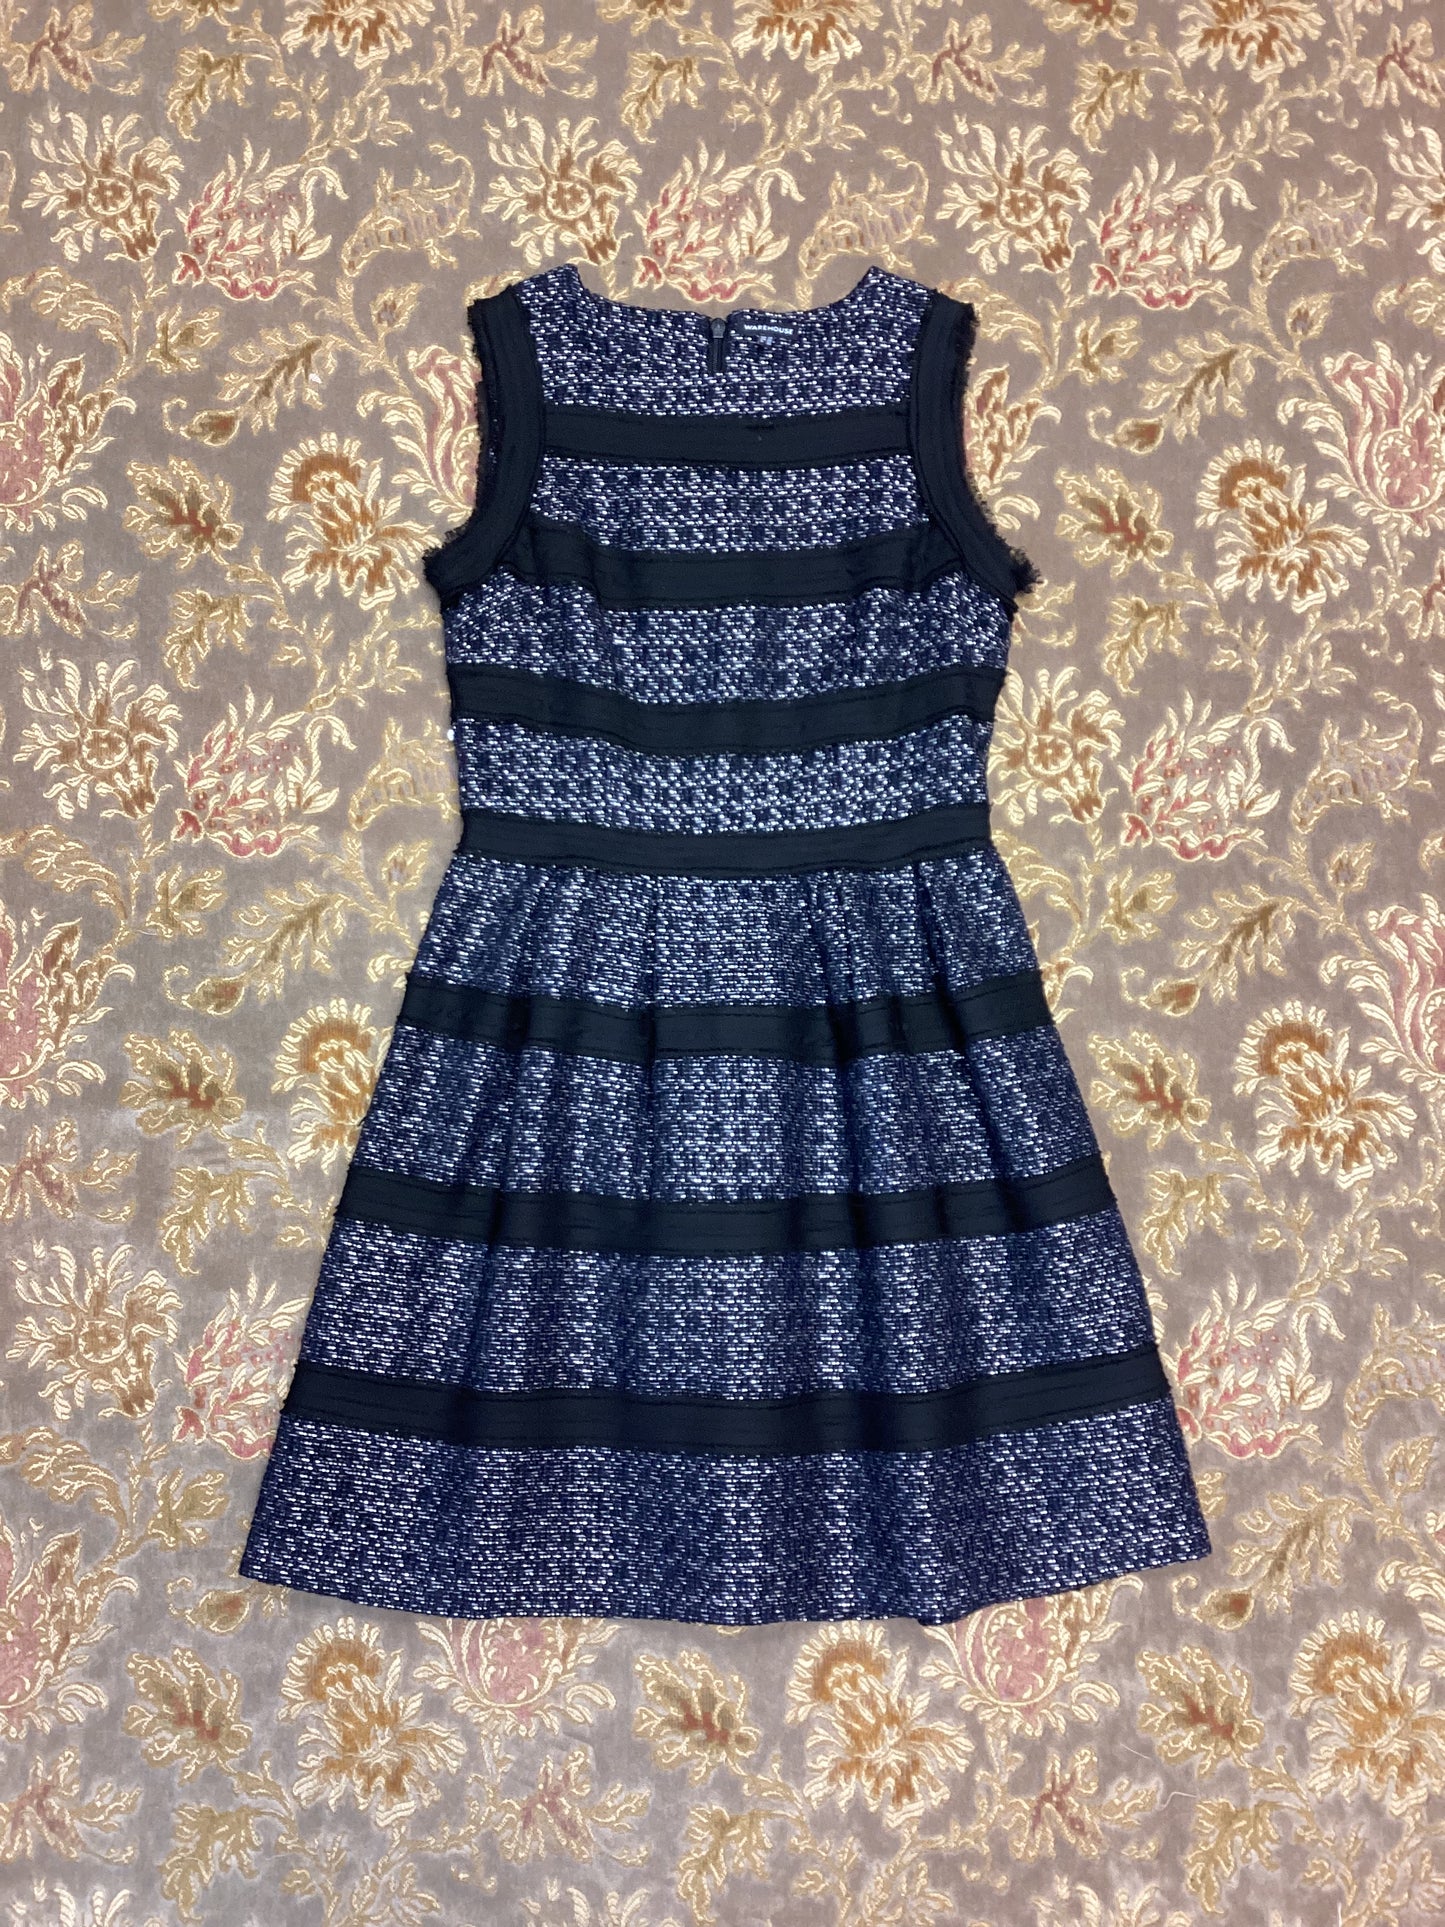 Warehouse Blue, Silver & Black Dress Size 10